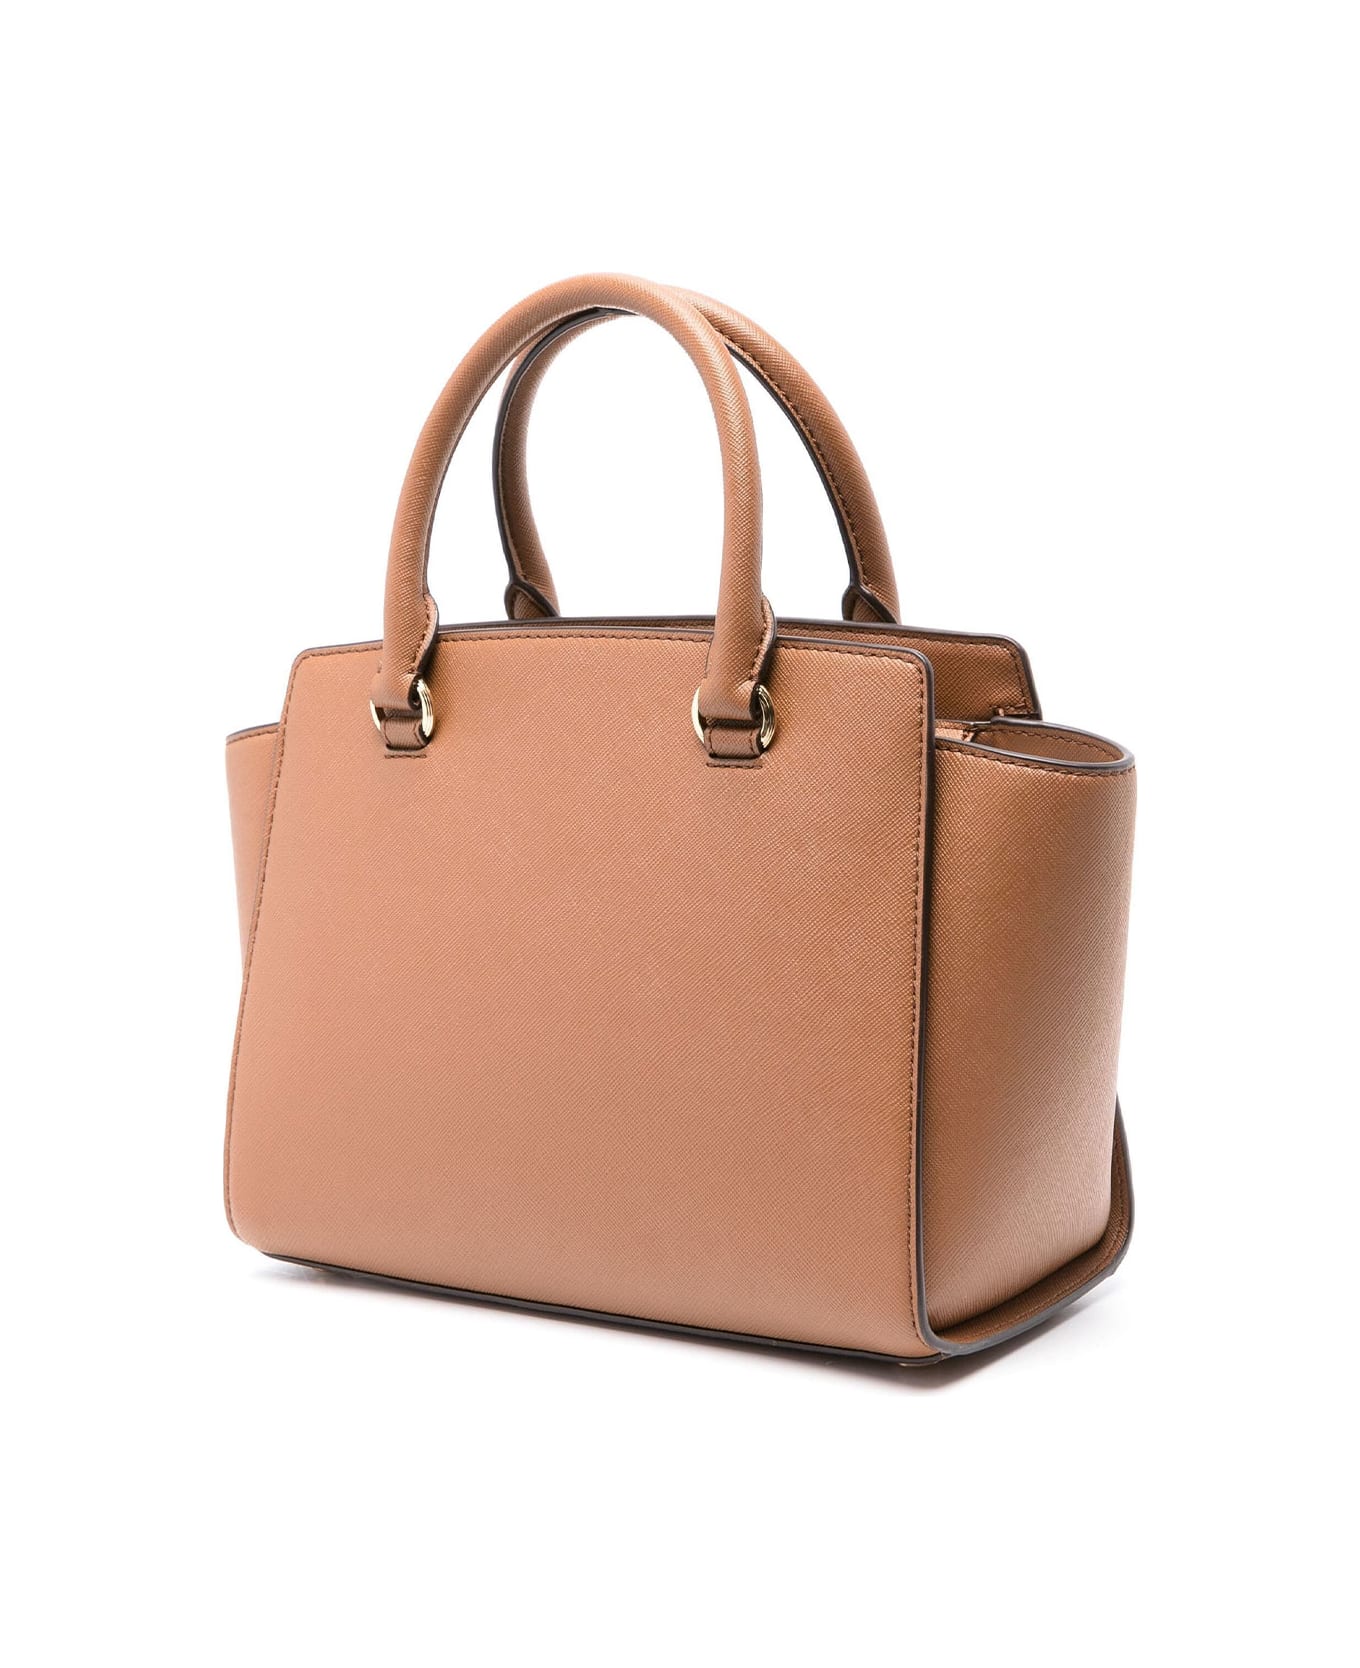 Michael Kors Saffiano Effect Handbag With Shoulder Strap - LUGGAGE トートバッグ